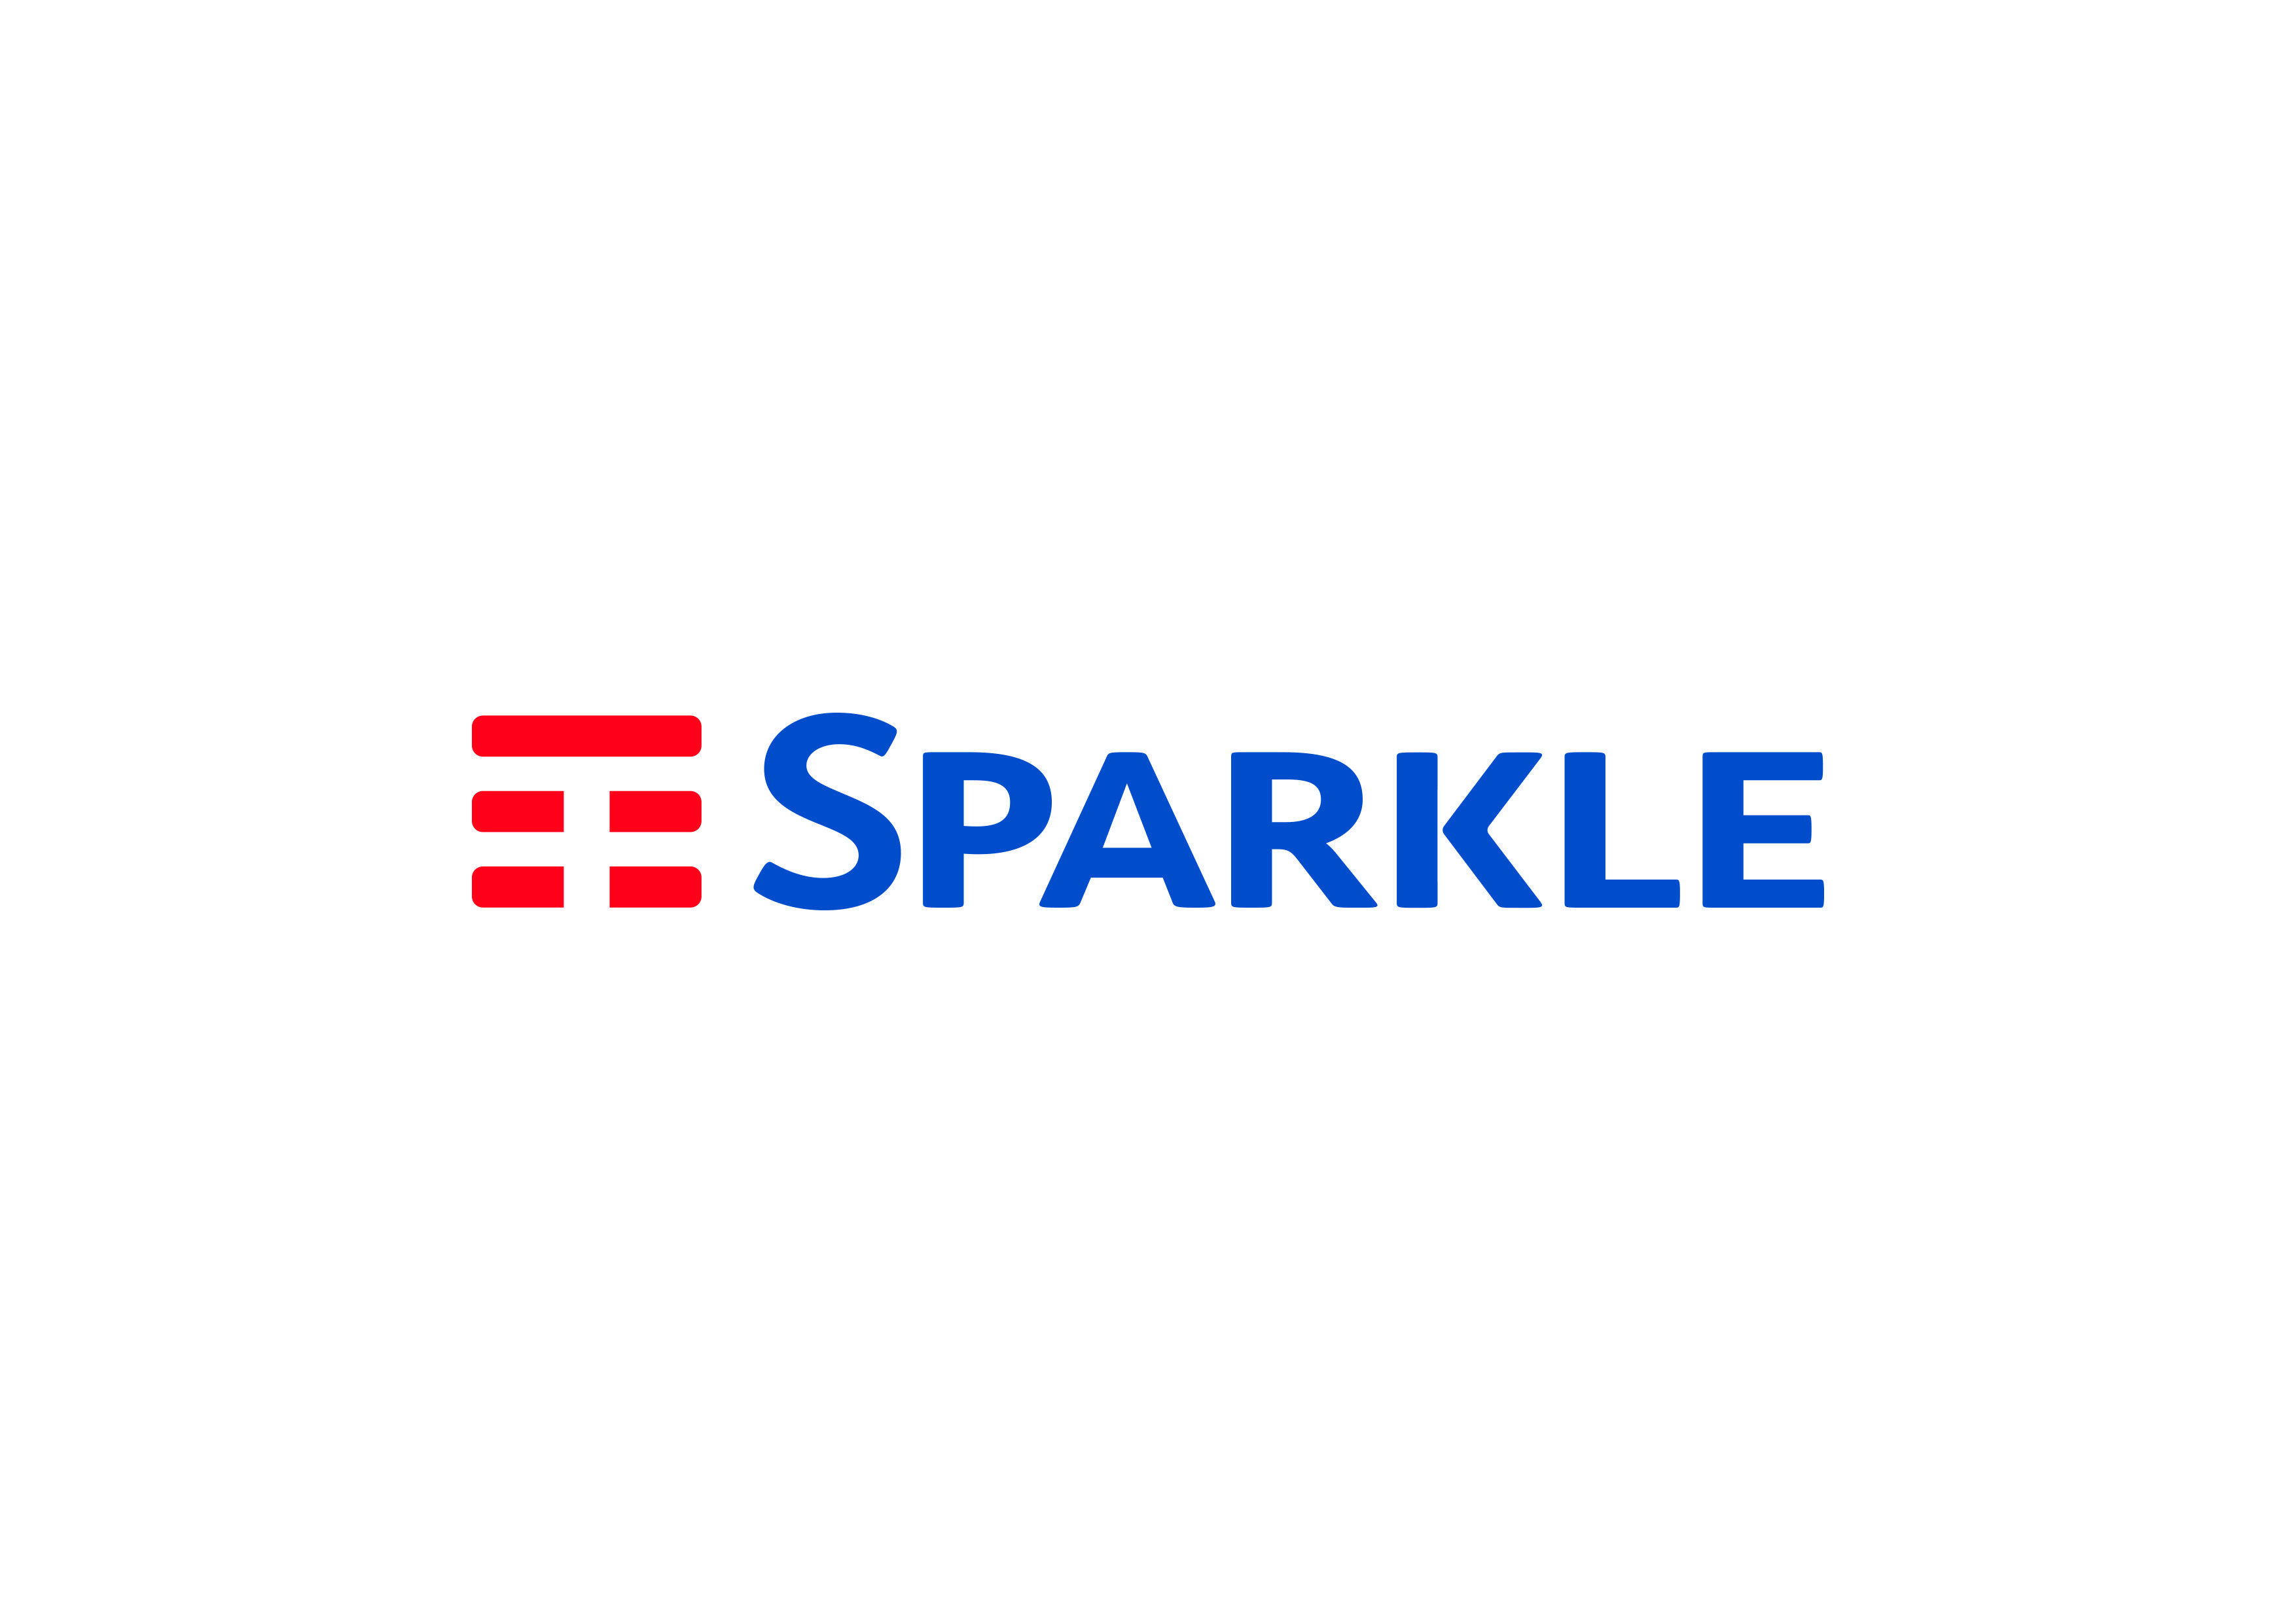 Sparkle Logo - File:SPARKLE logo.jpg - Wikimedia Commons